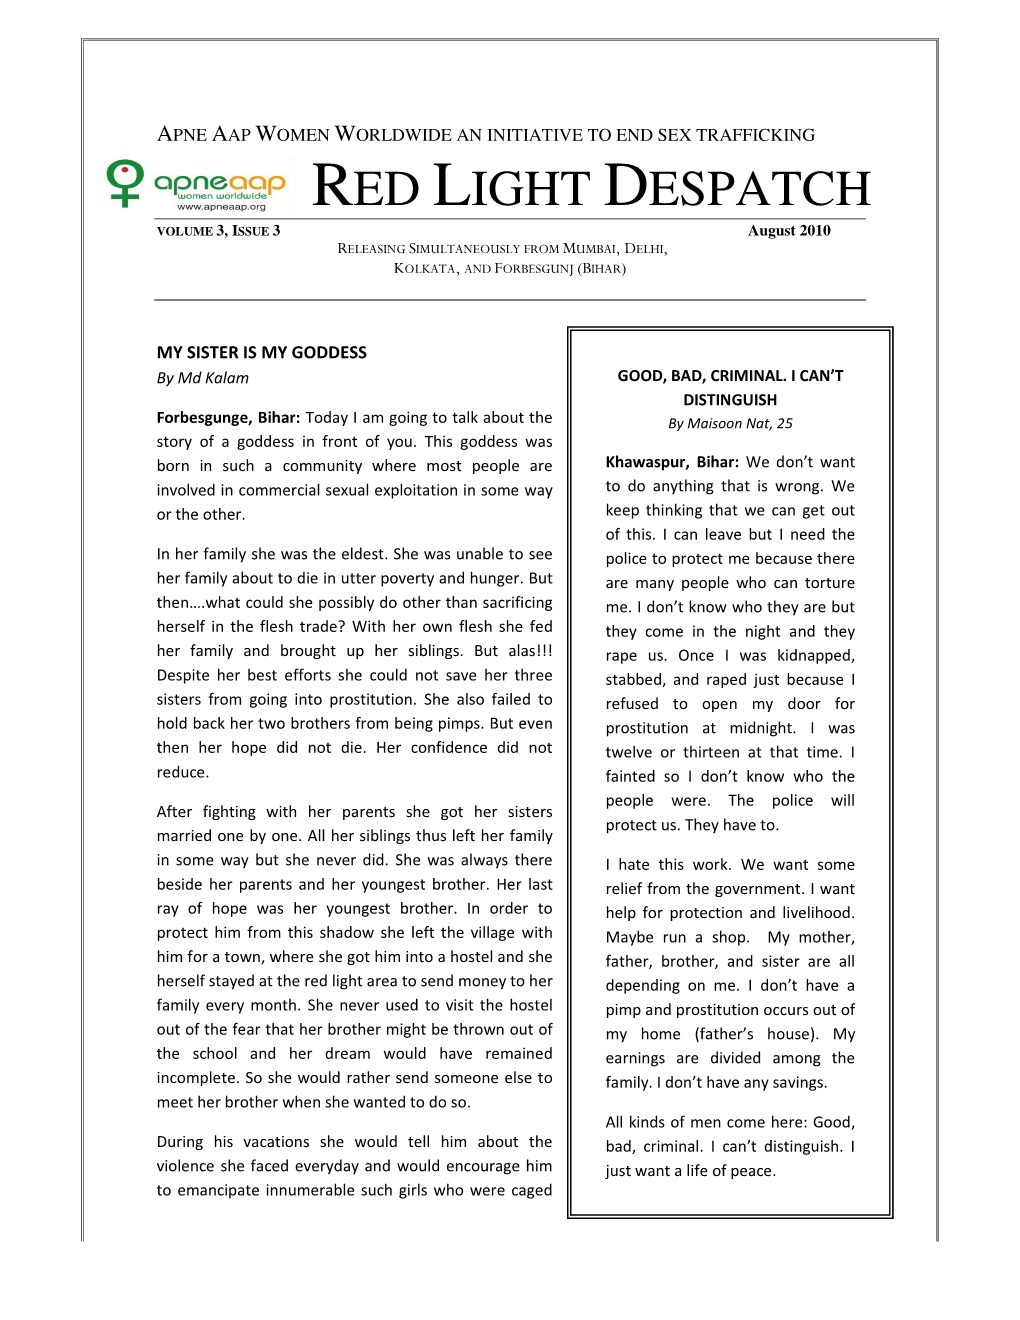 Red Light Despatch